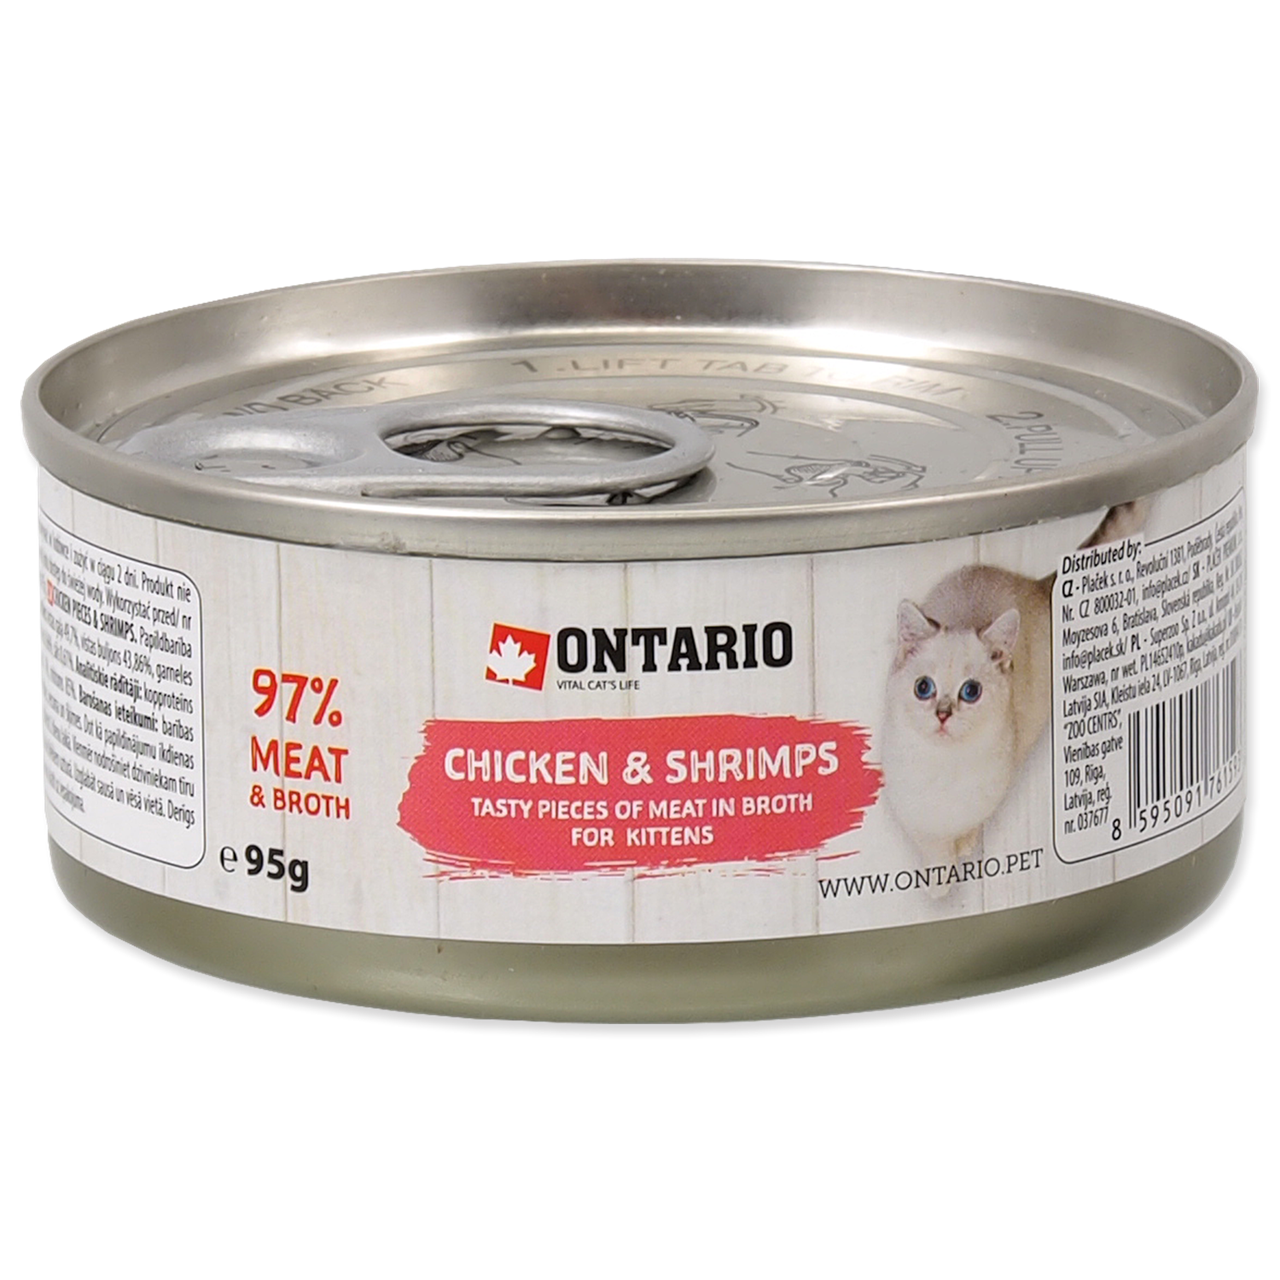 Ontario кусочки цыплёнка и креветки для котят банка 95г от зоомагазина Дино Зоо